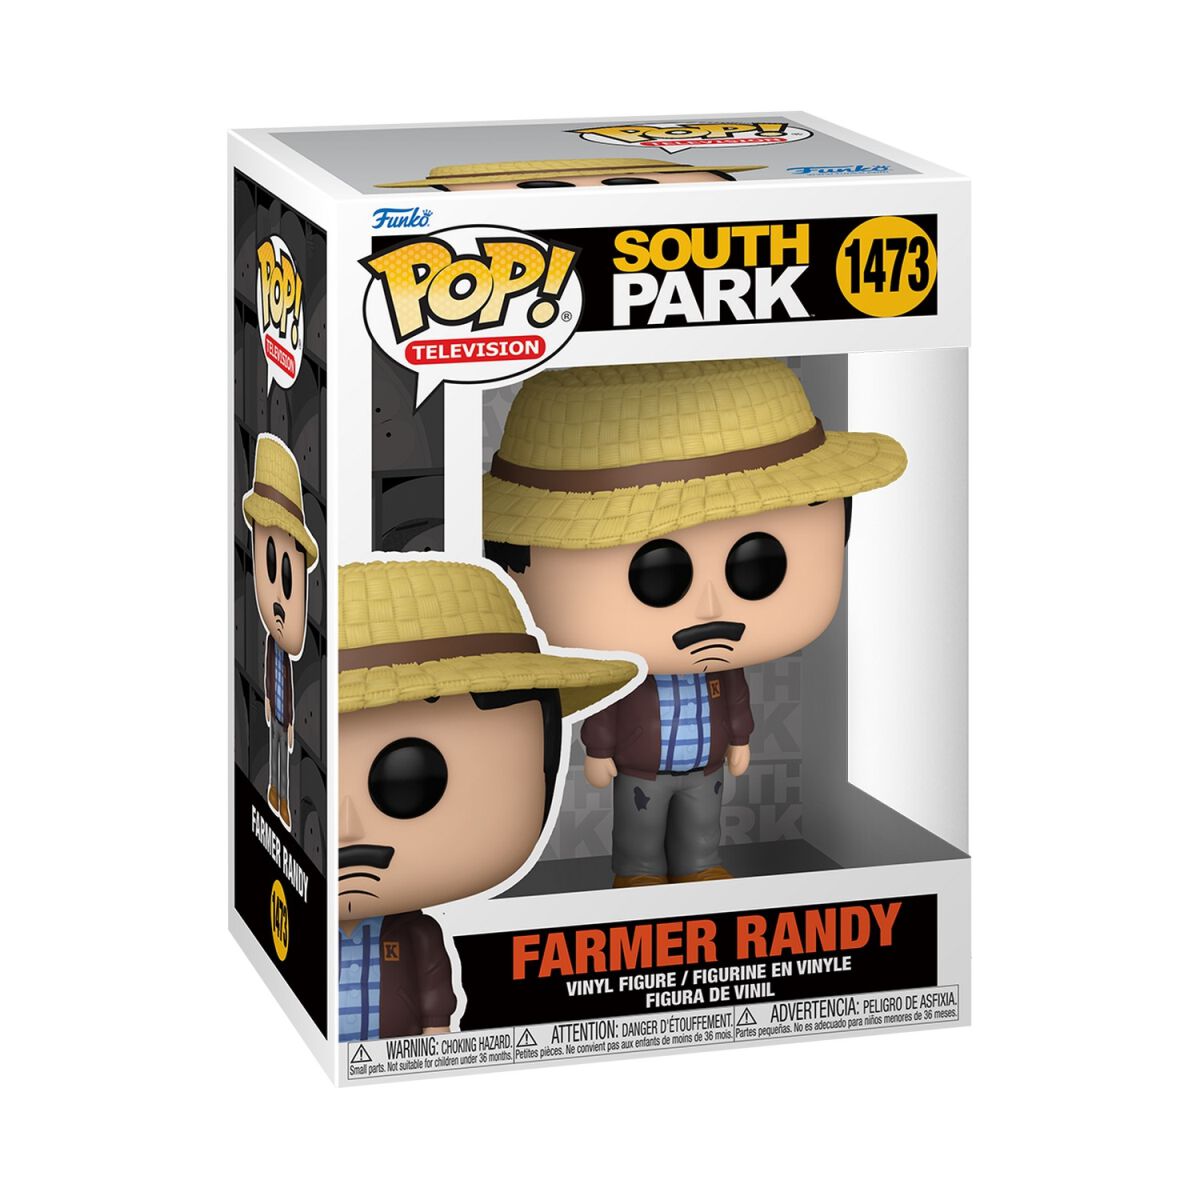 South Park - Farmer Randy Vinyl Figur 1473 - Funko Pop! Figur - Funko Shop Deutschland - Lizenzierter Fanartikel